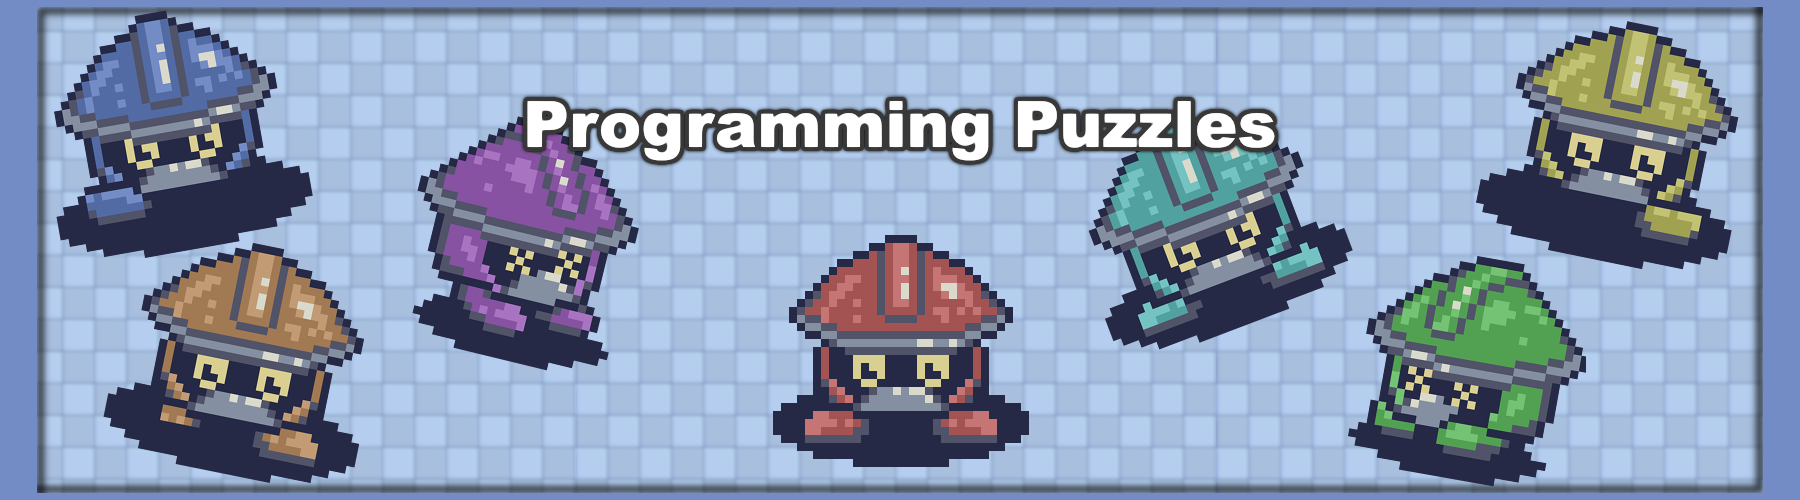 Programming Puzzles